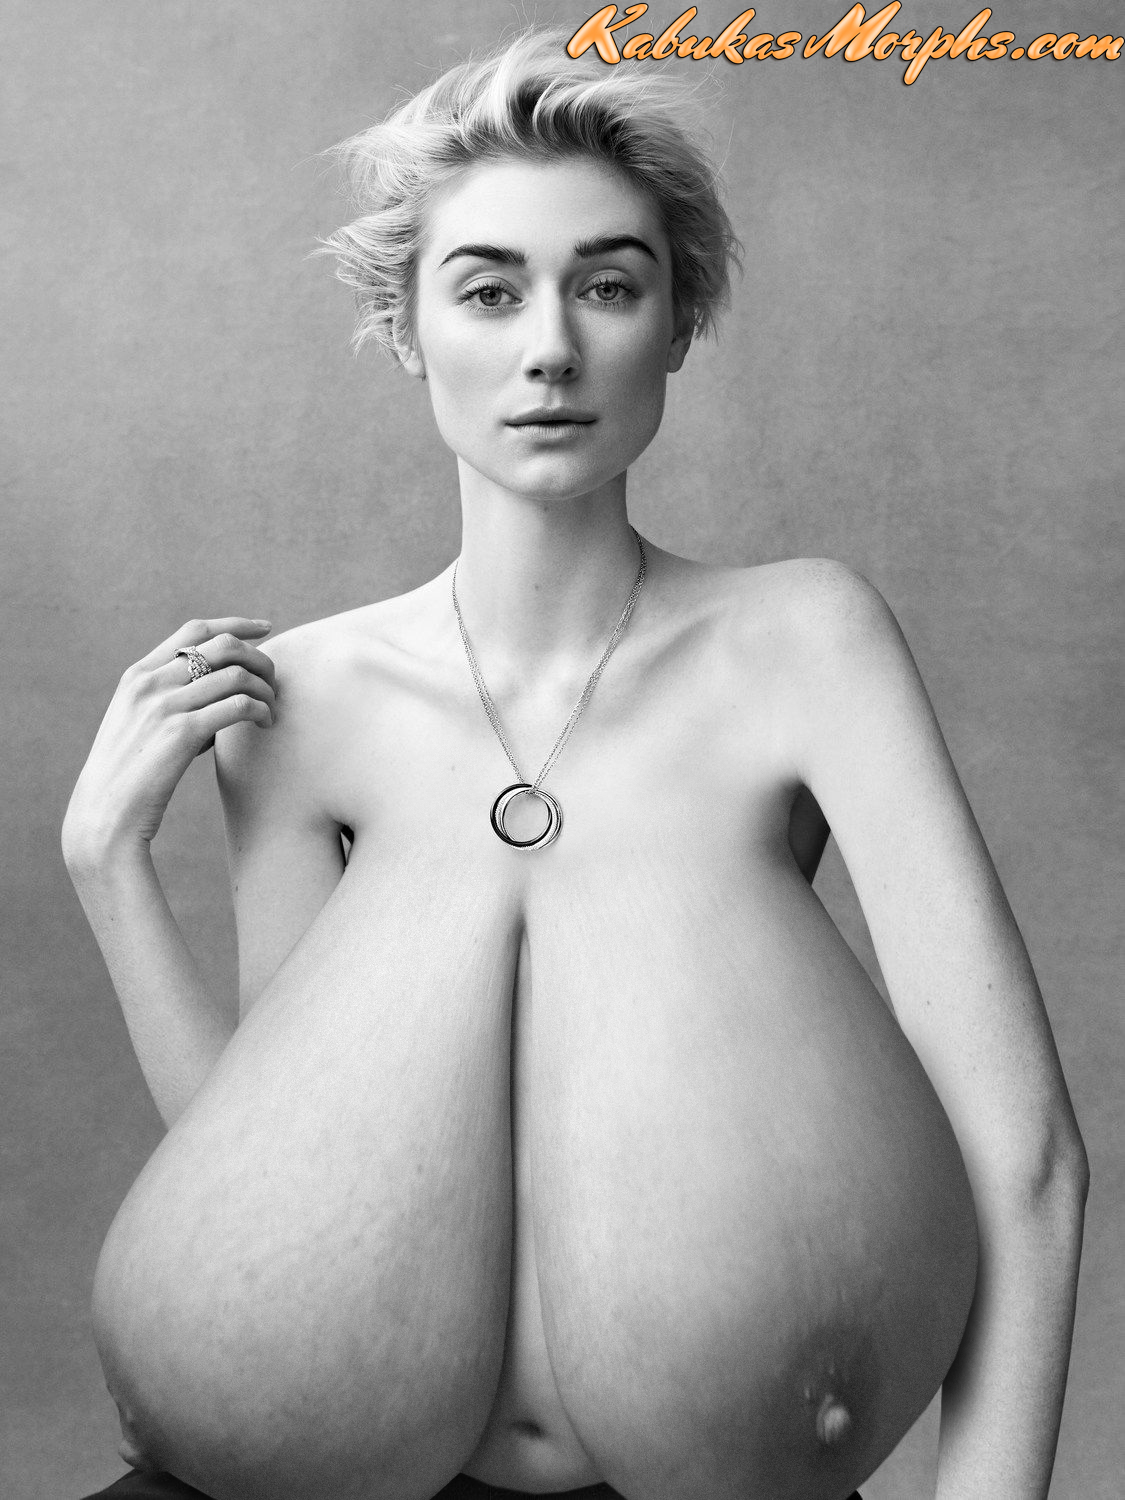 ace pagodas share super skinny huge tits photos